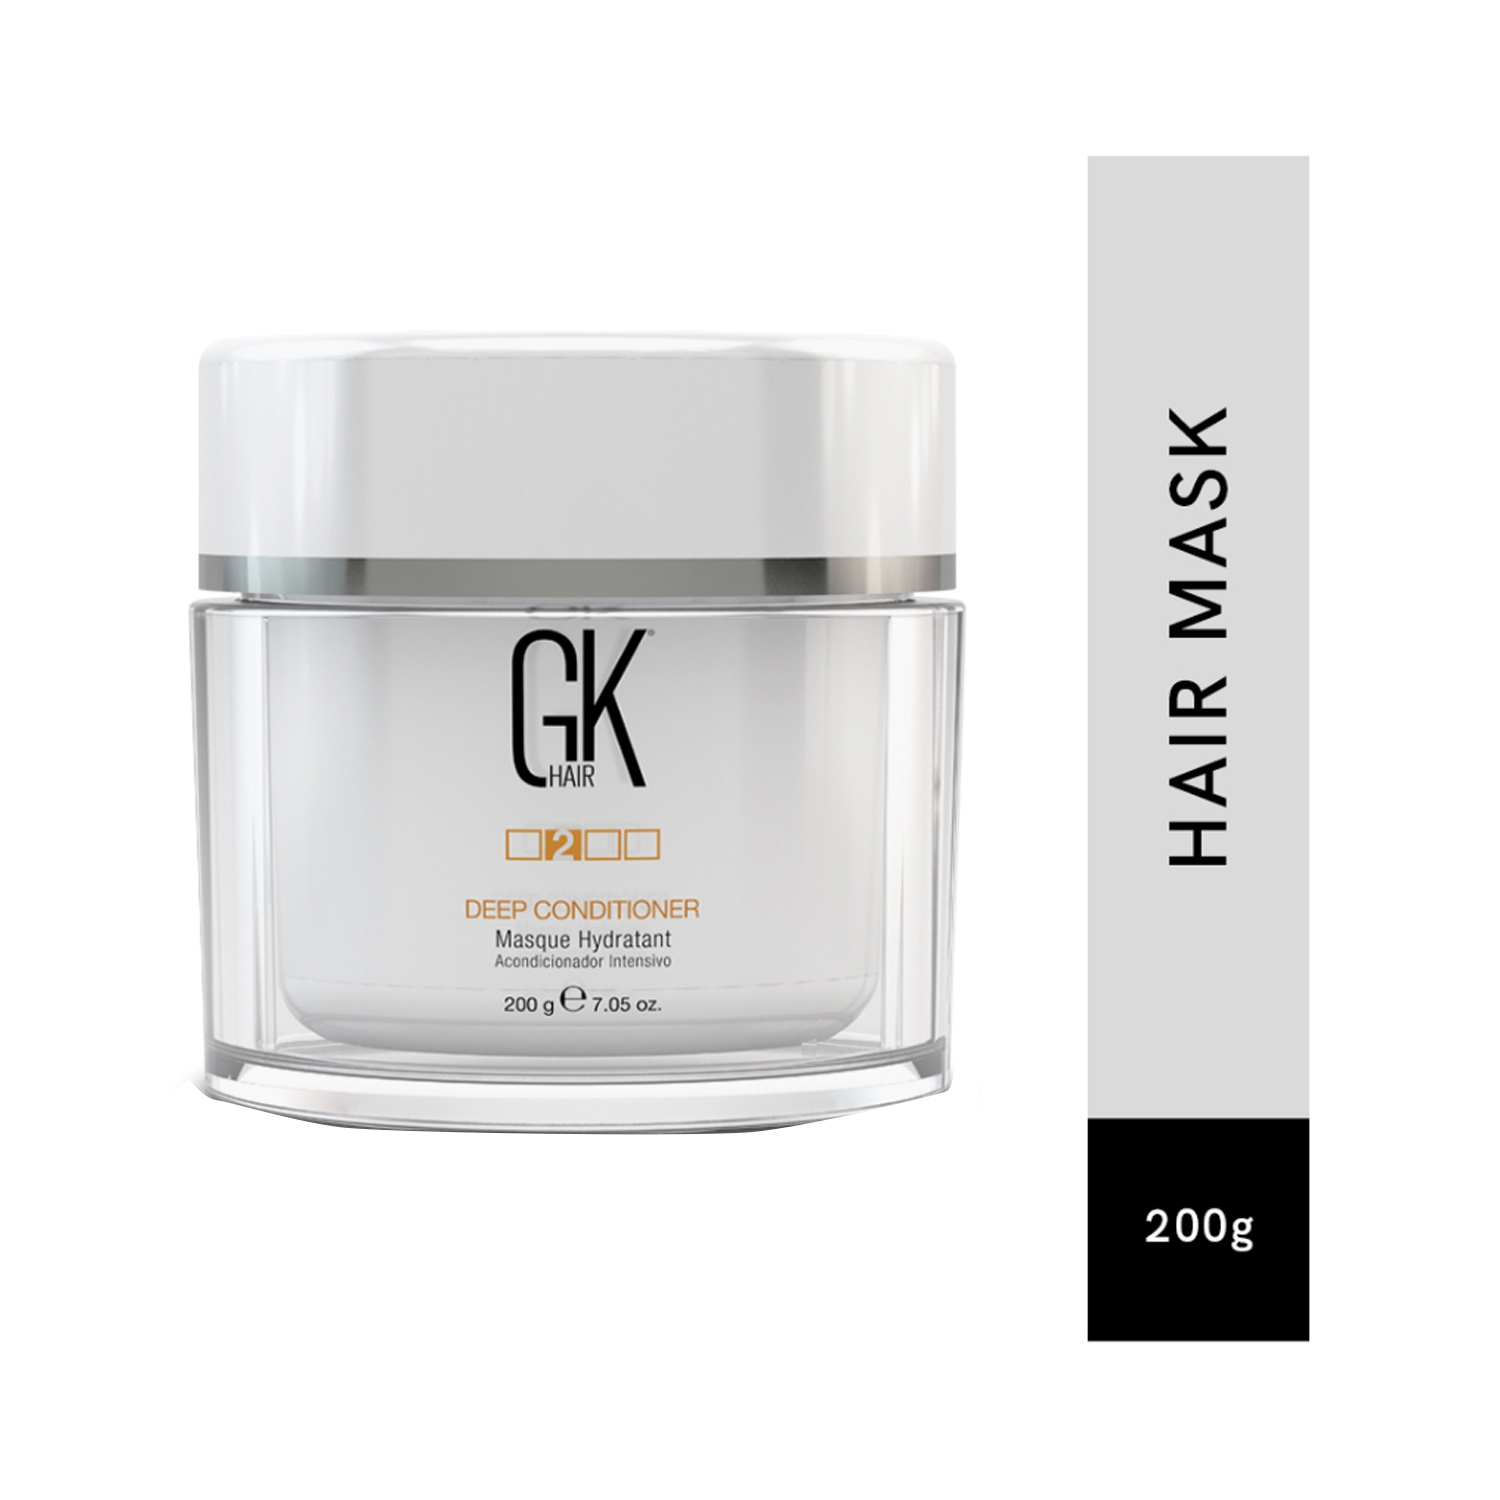 GK Hair | GK Hair Deep Conditioner Masque (200g)